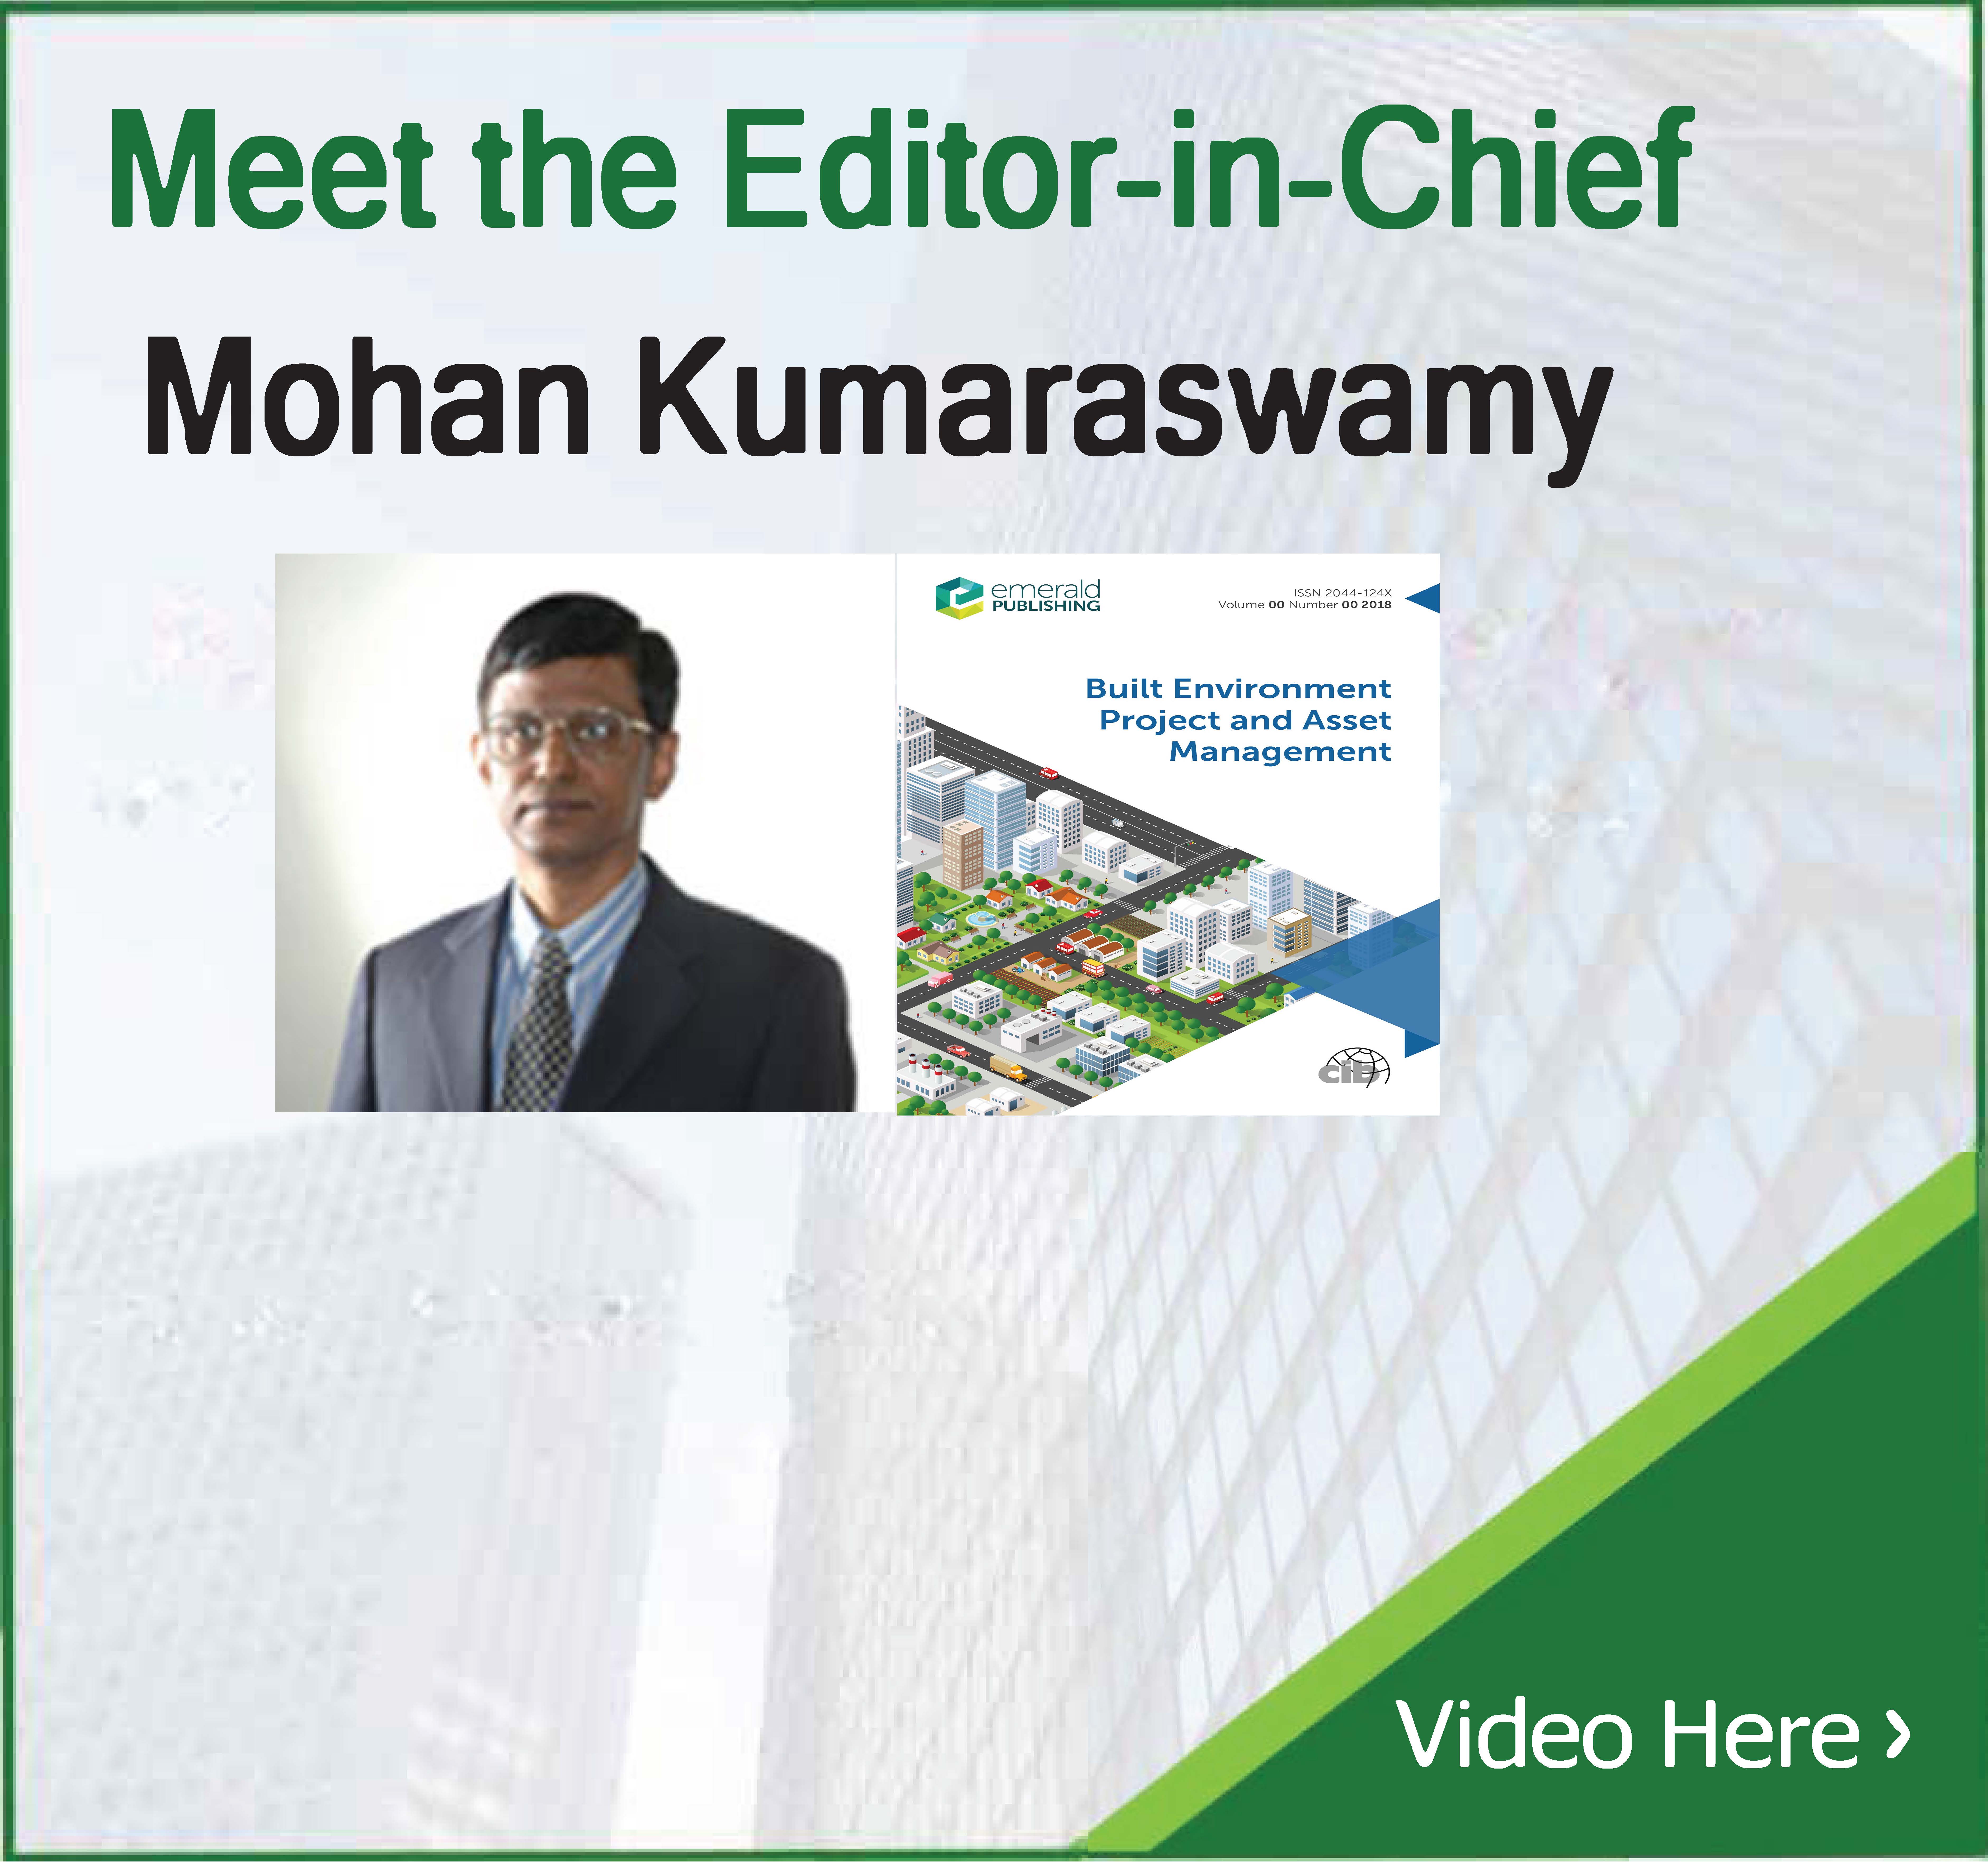 Meet the Editor-in-Chief Mohan Kumaraswamy